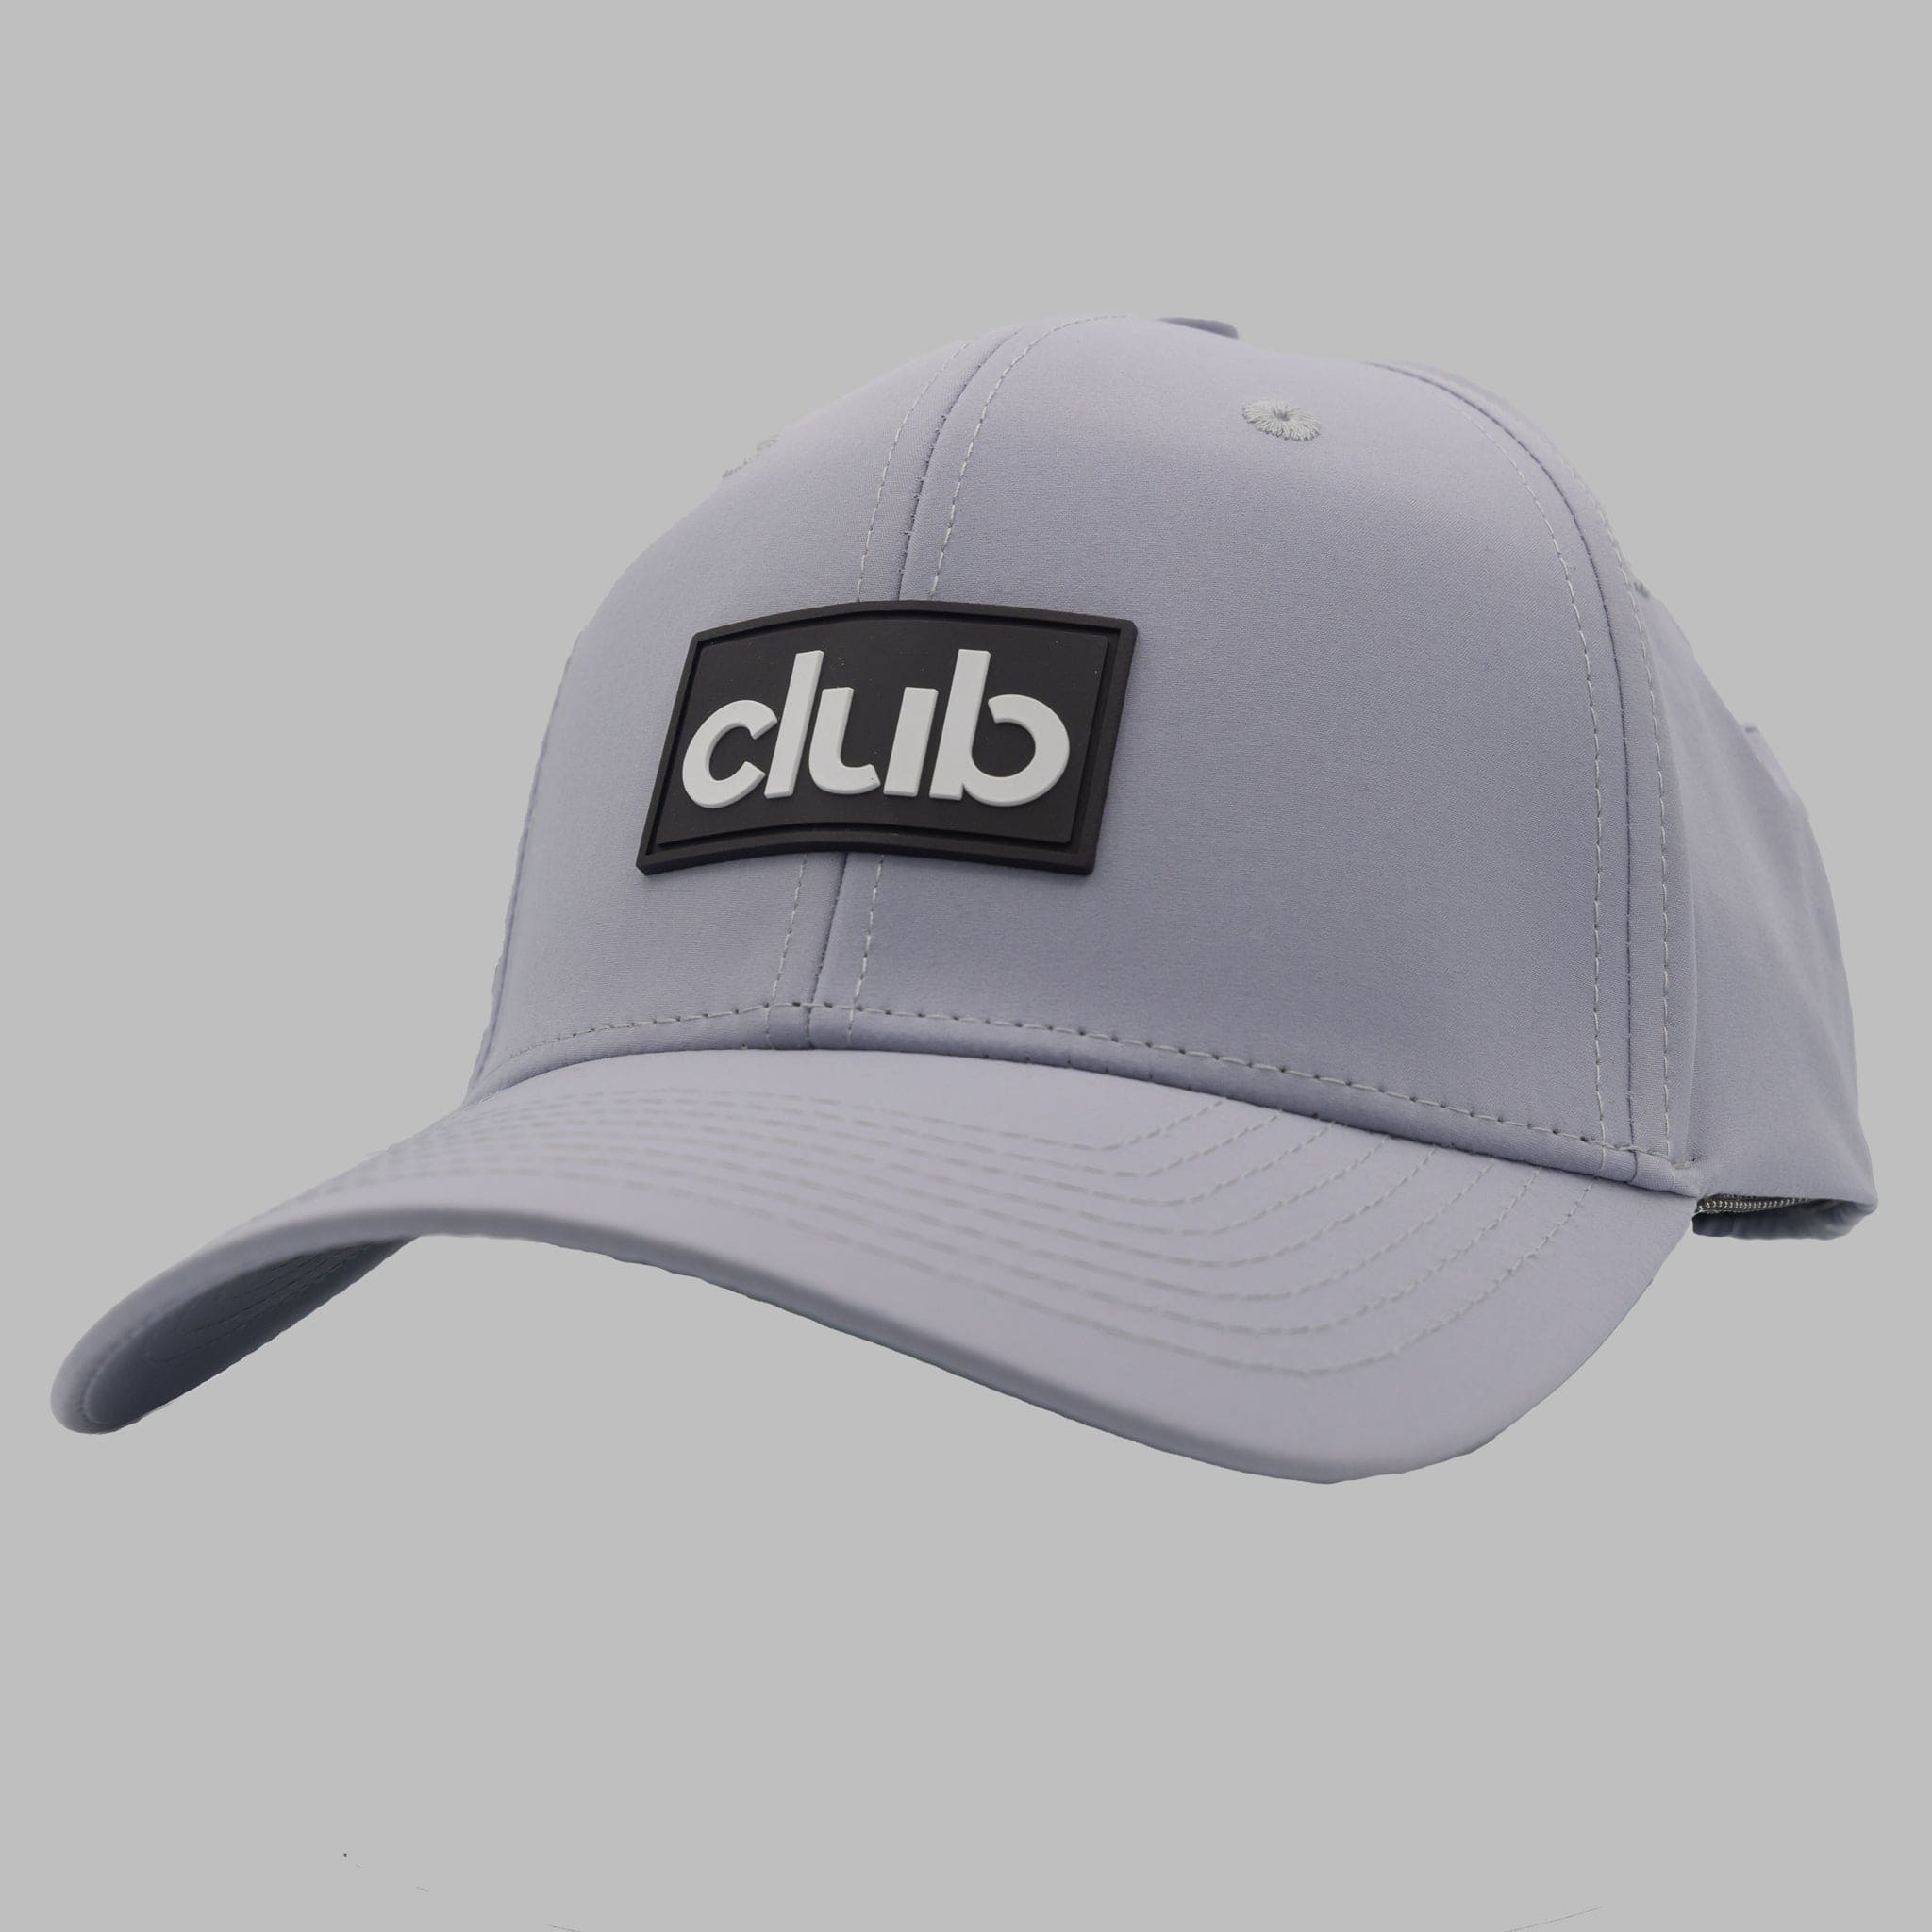 Club Performance Hat